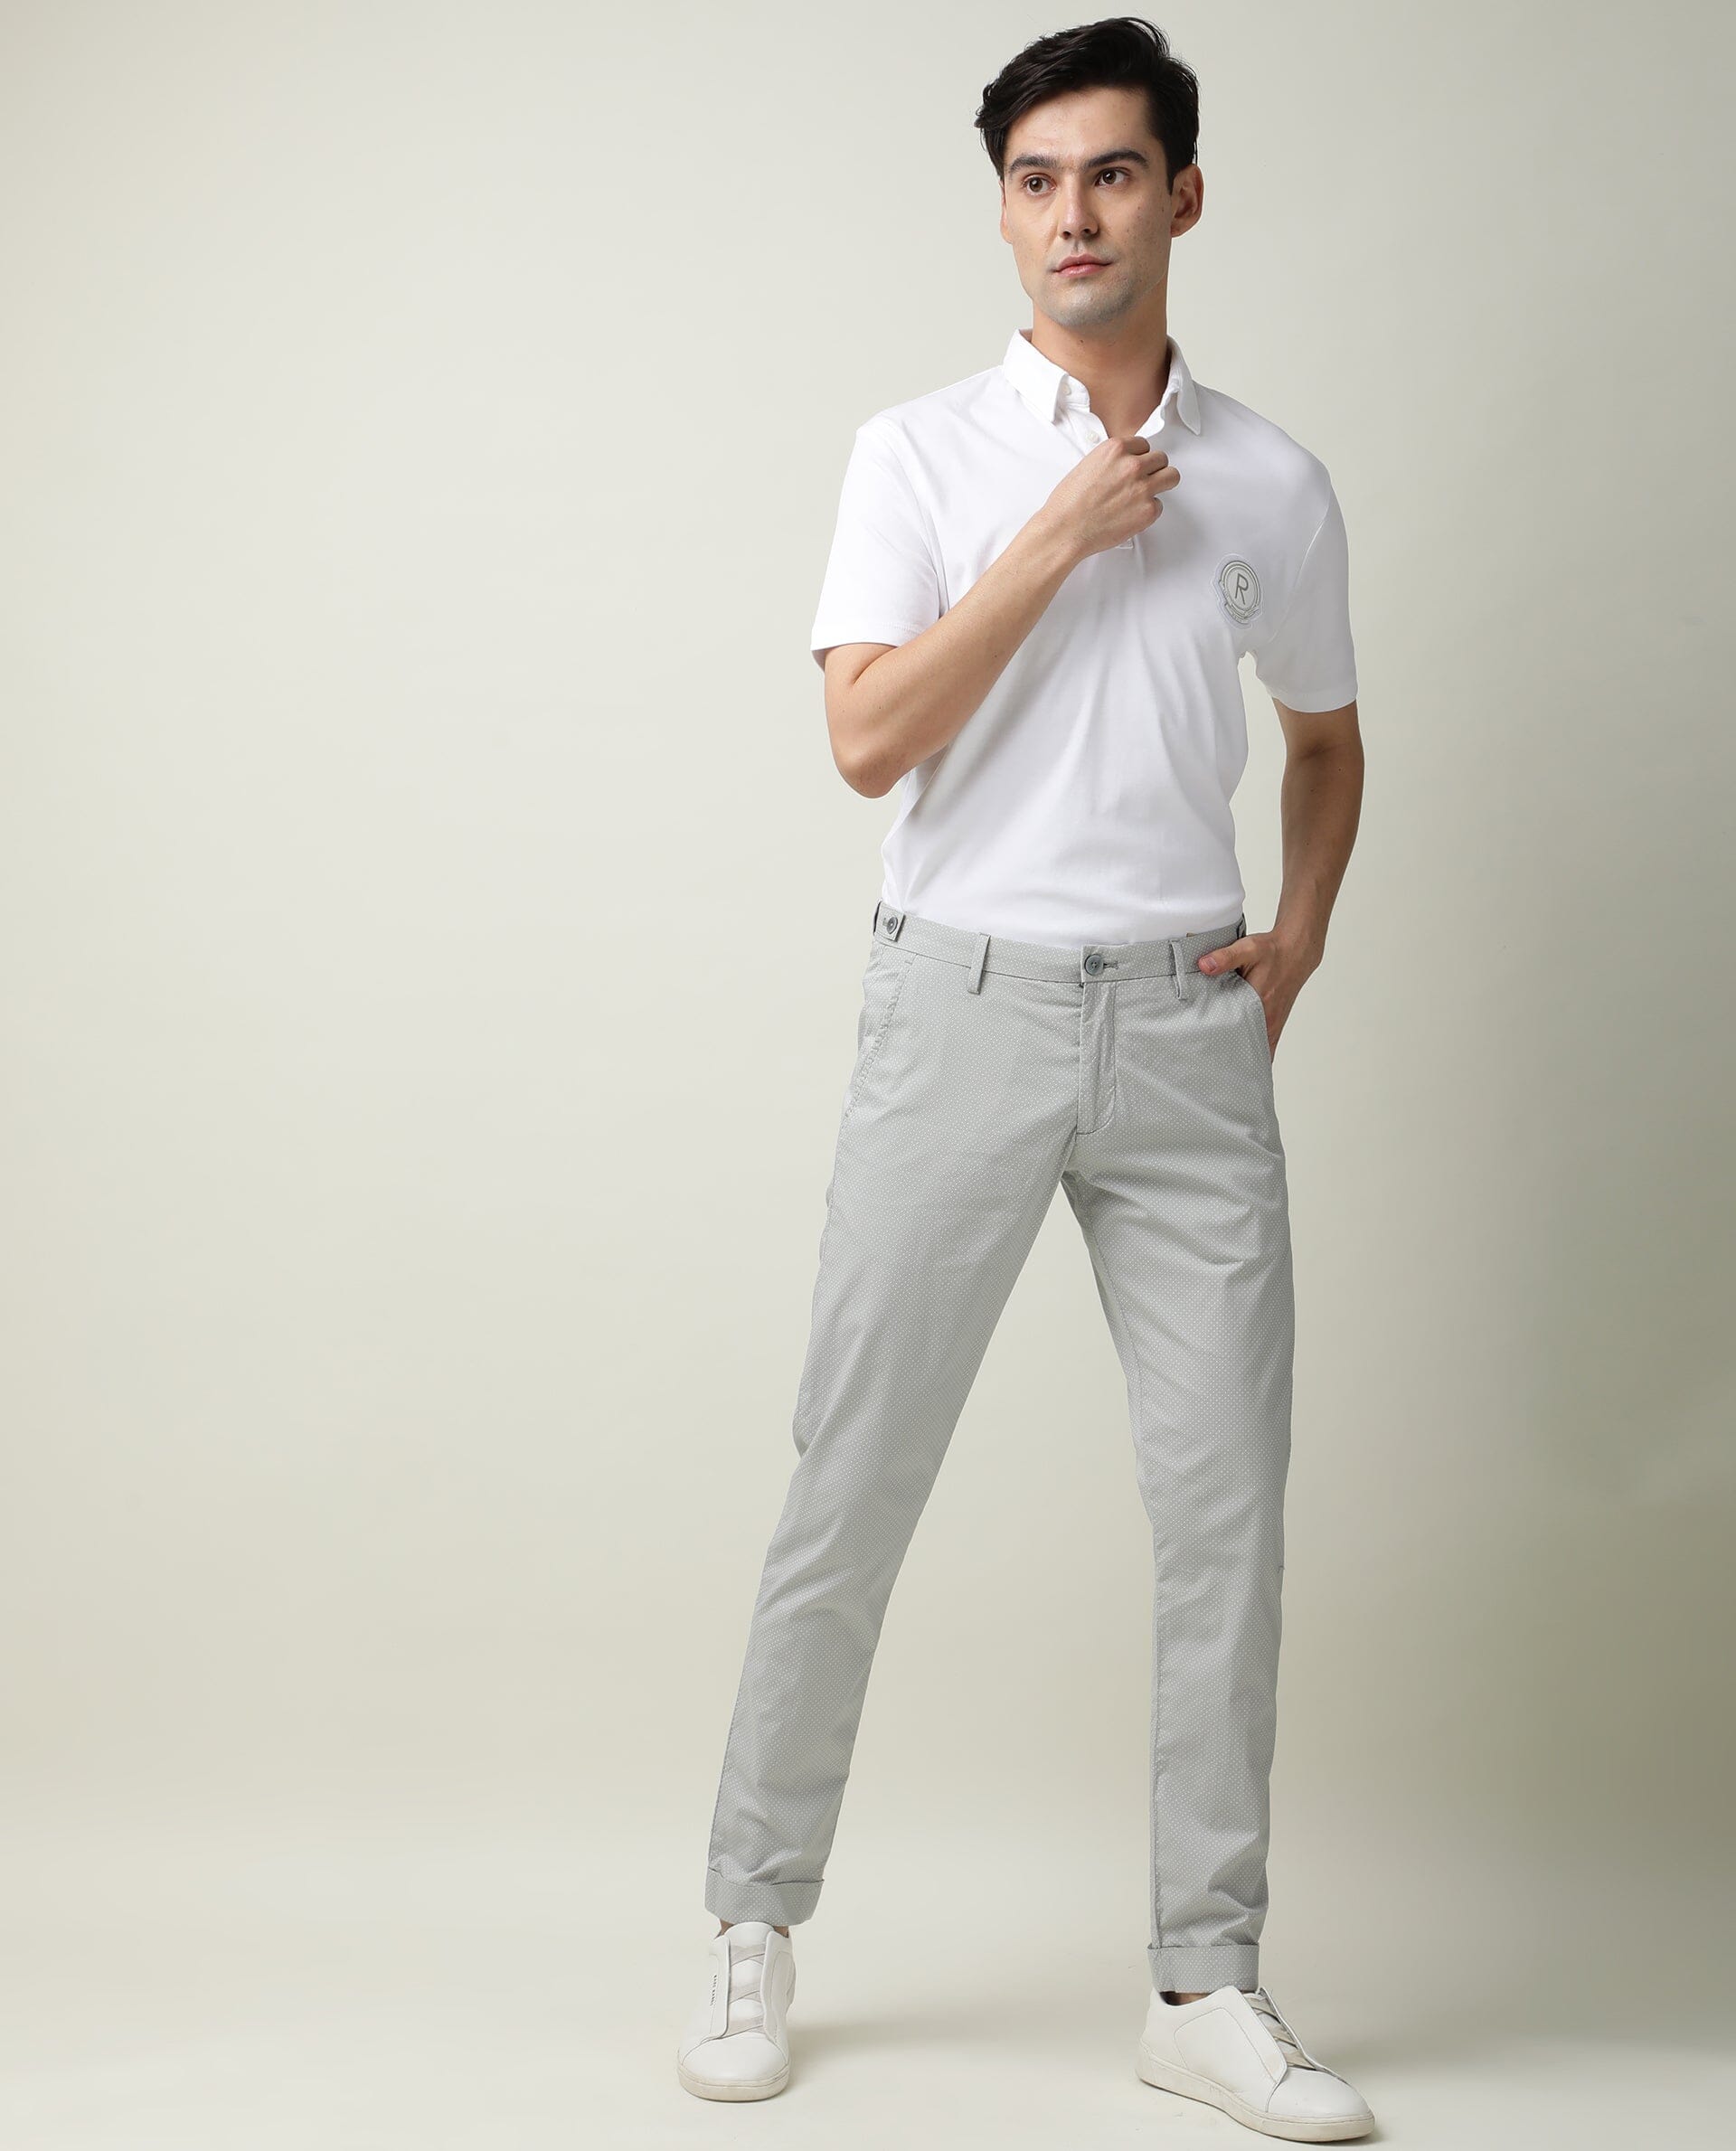 Rare Rabbit Men's Trews-1 Khaki Solid Mid-Rise Regular Fit Trouser